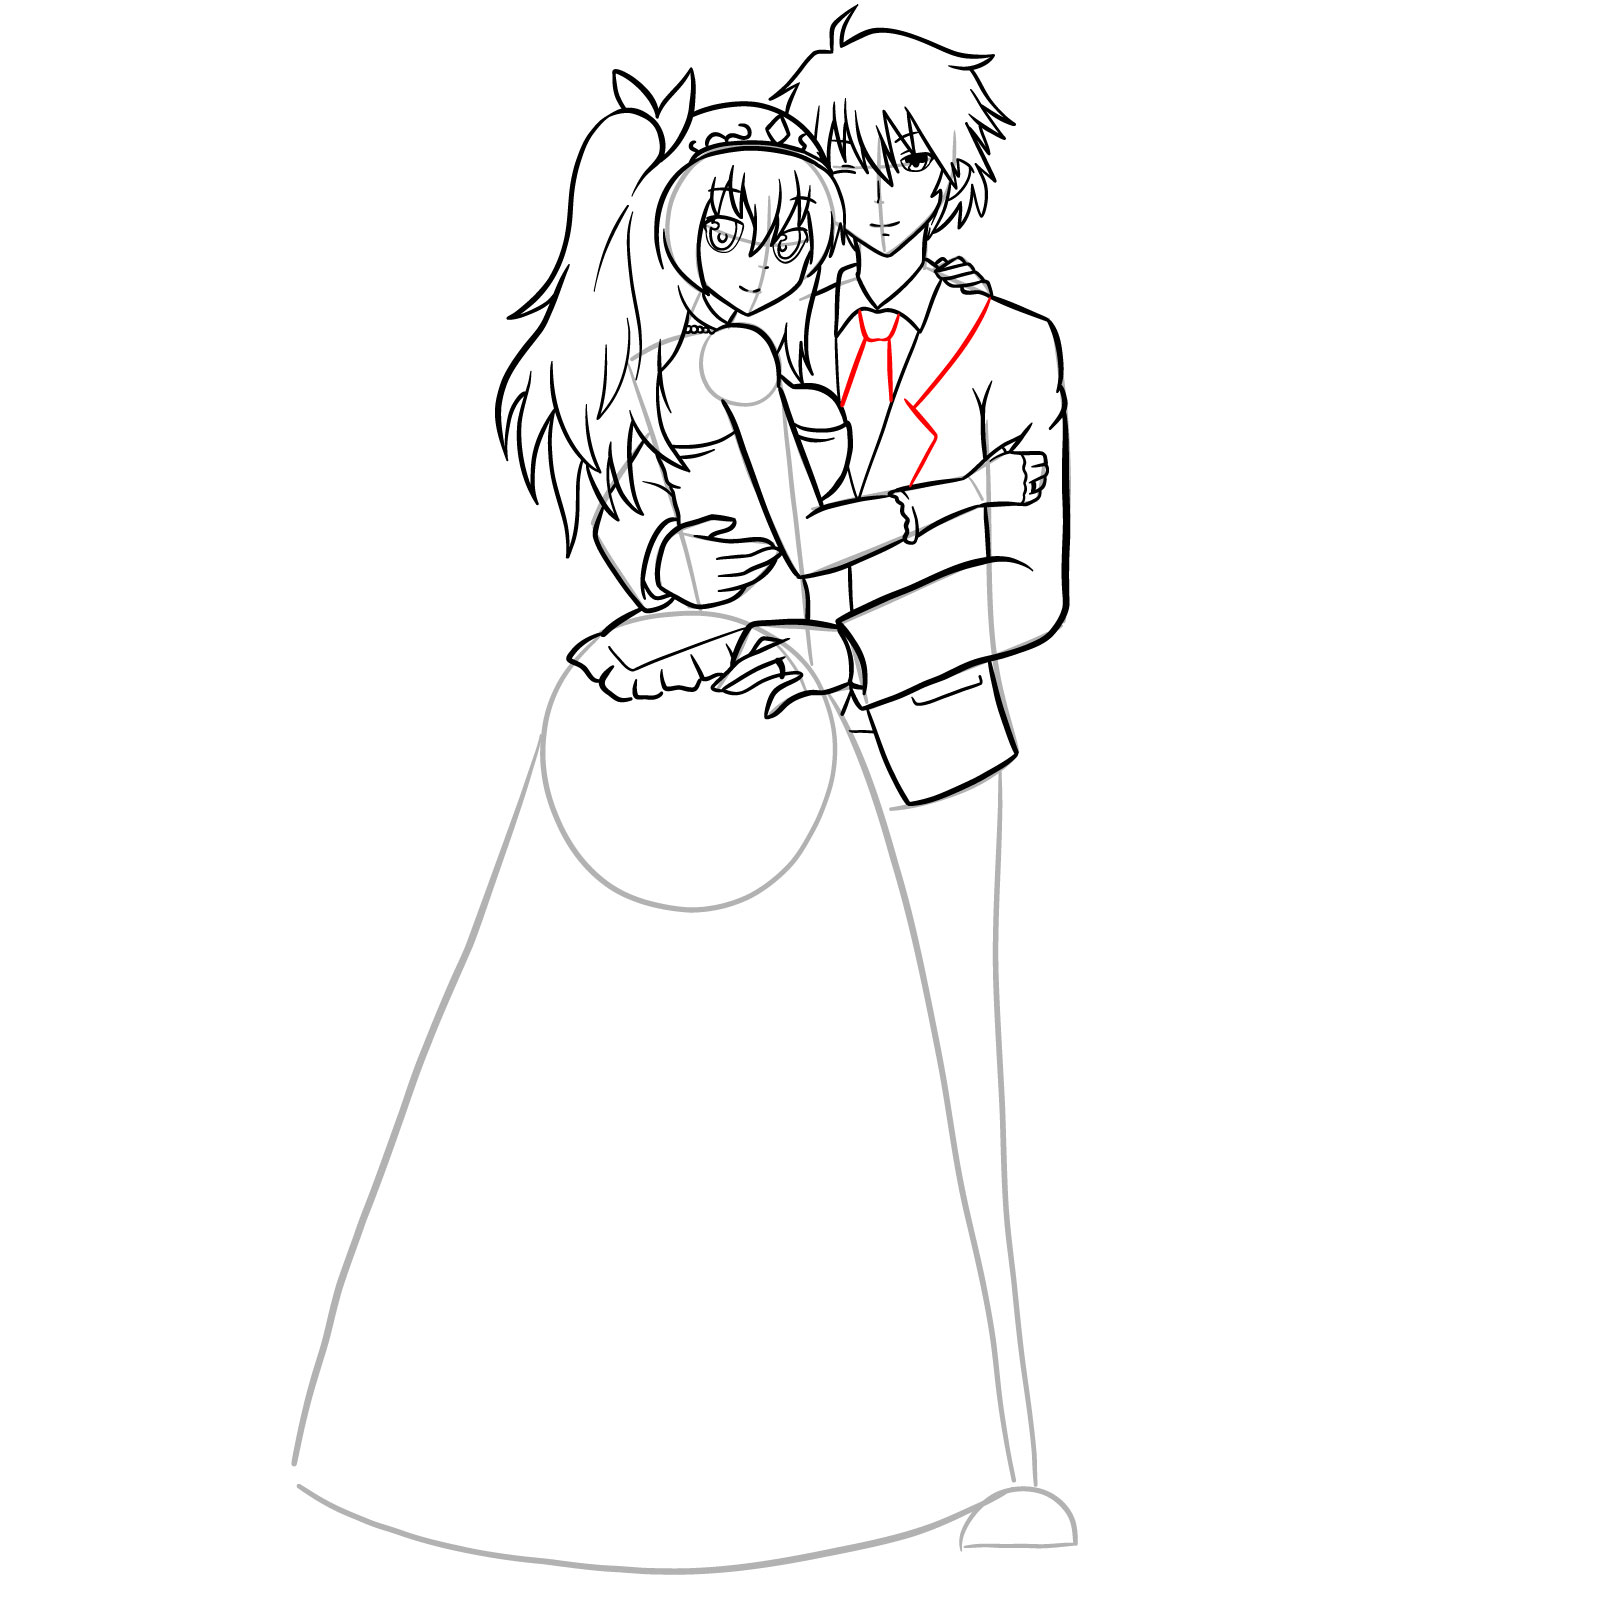 How to draw Ikki and Stella's wedding - step 47